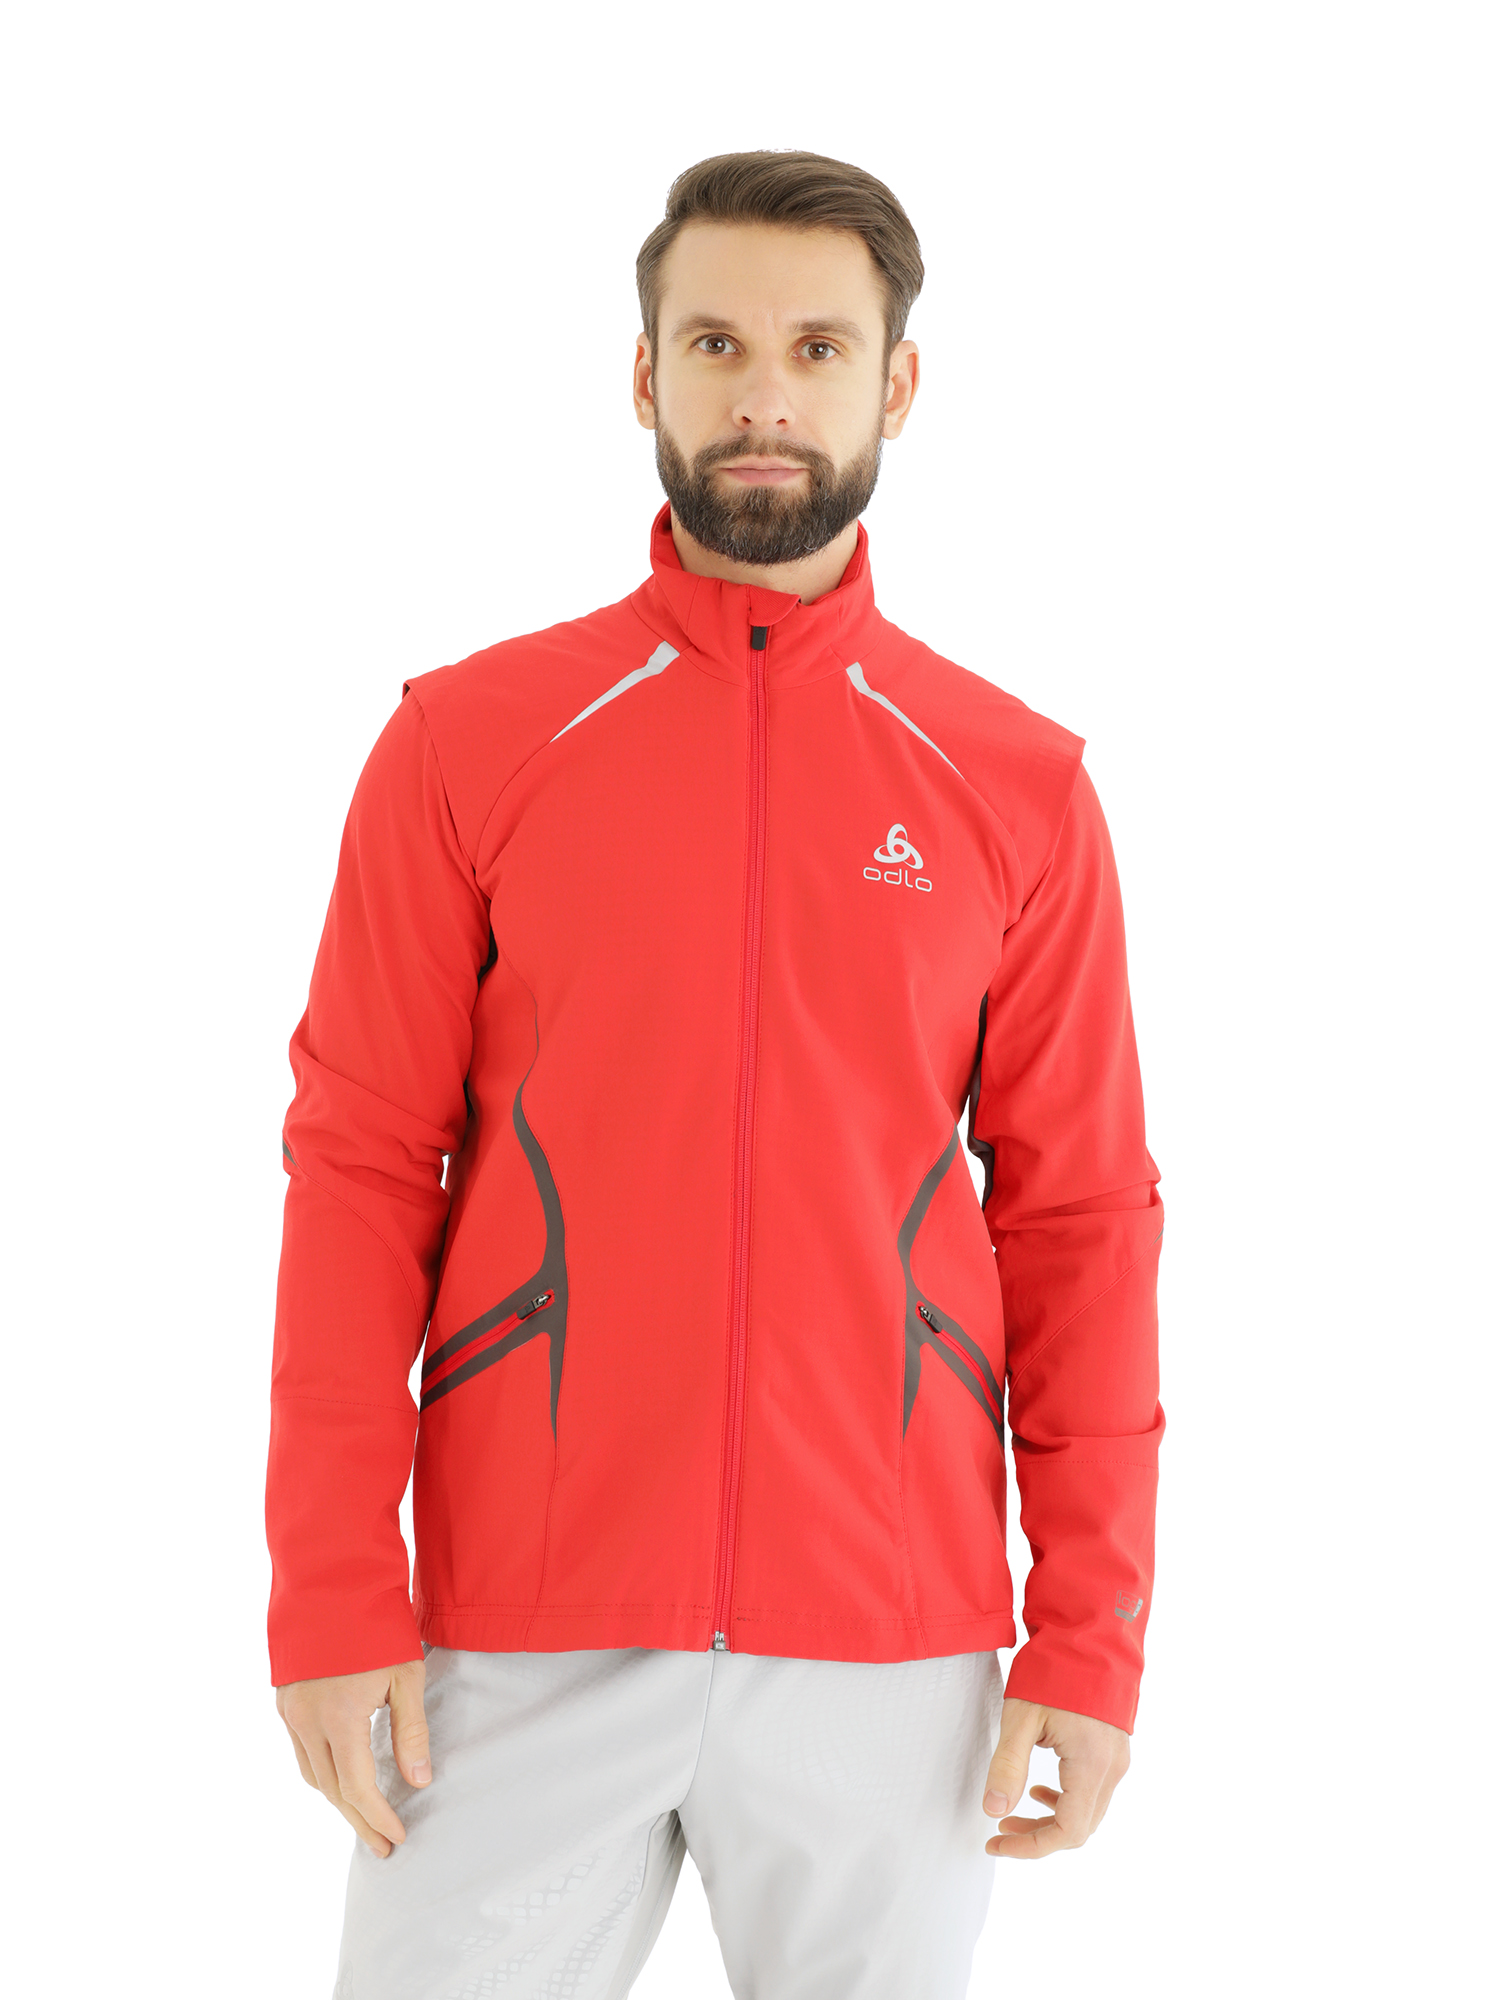 Спортивная куртка мужская Odlo Jacket Blizzard Men красная XL